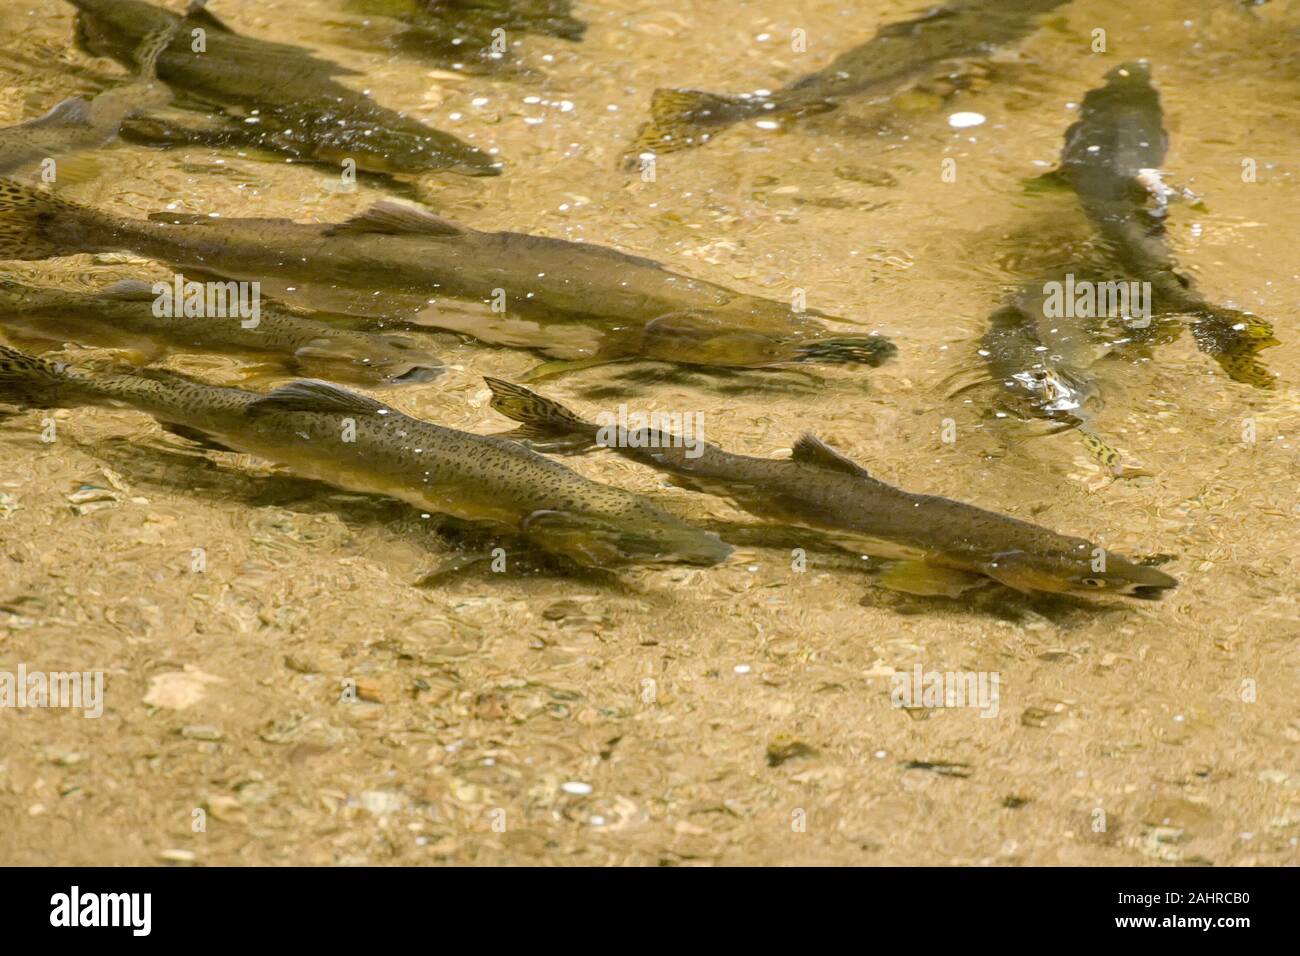 School of Pink Salmon or Humpback Salmon fish in a clear stream in Anan Creek & Bay area of Alaska. Stock Photo